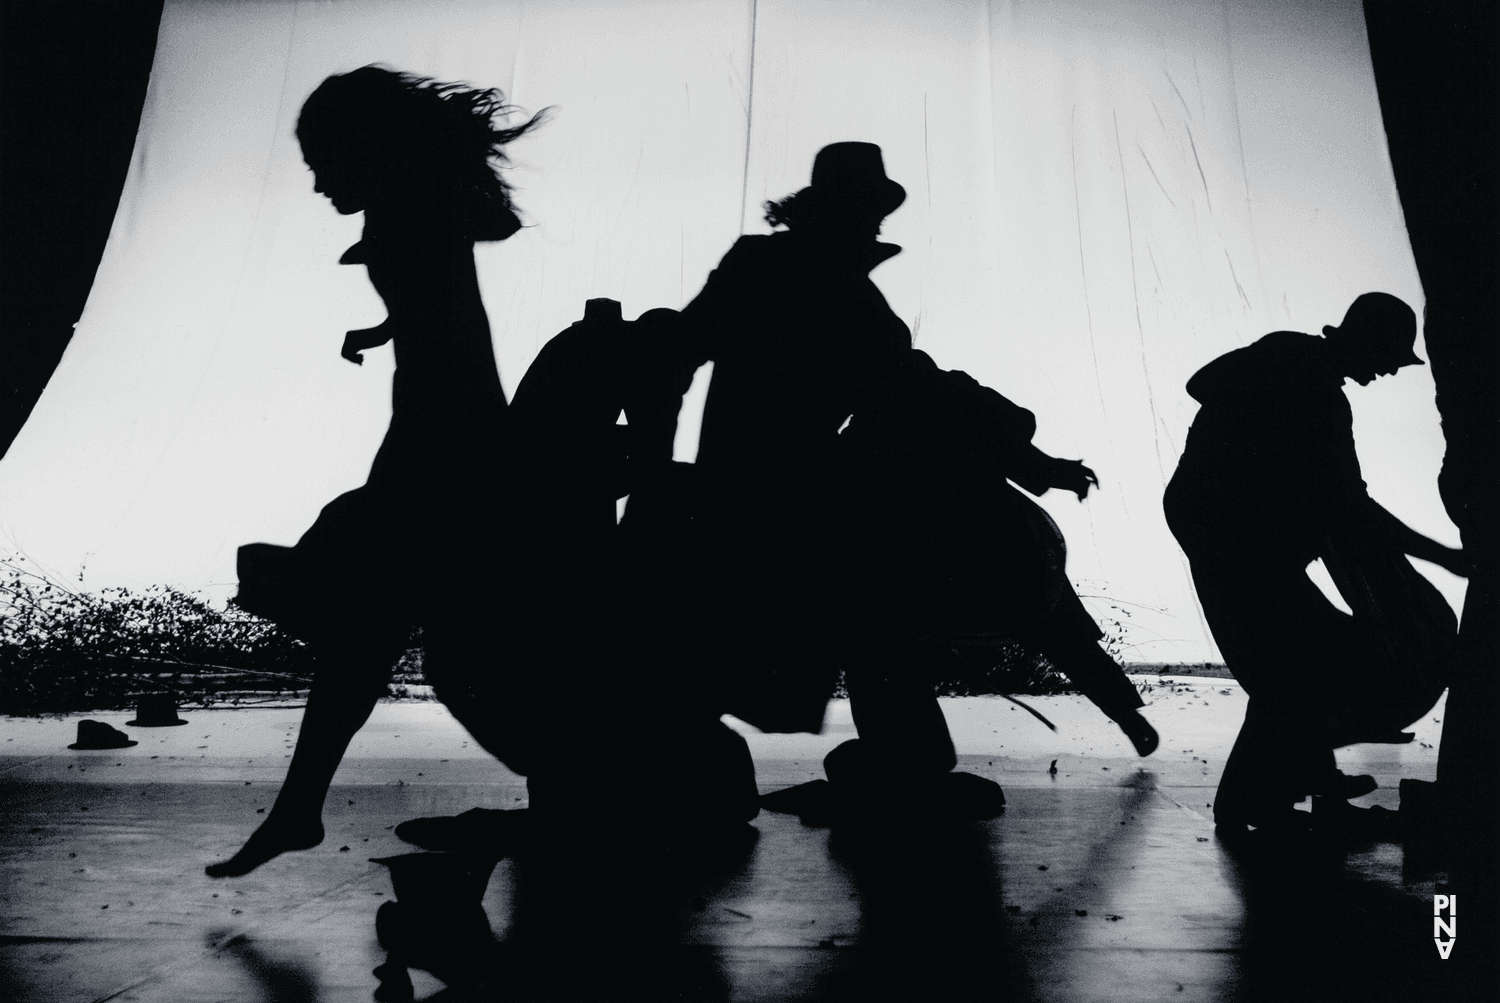 Thusnelda Mercy, Jorge Puerta Armenta and Urs Kaufmann in “Come Dance With Me” by Pina Bausch at Schauspielhaus Wuppertal, Oct. 8, 2008